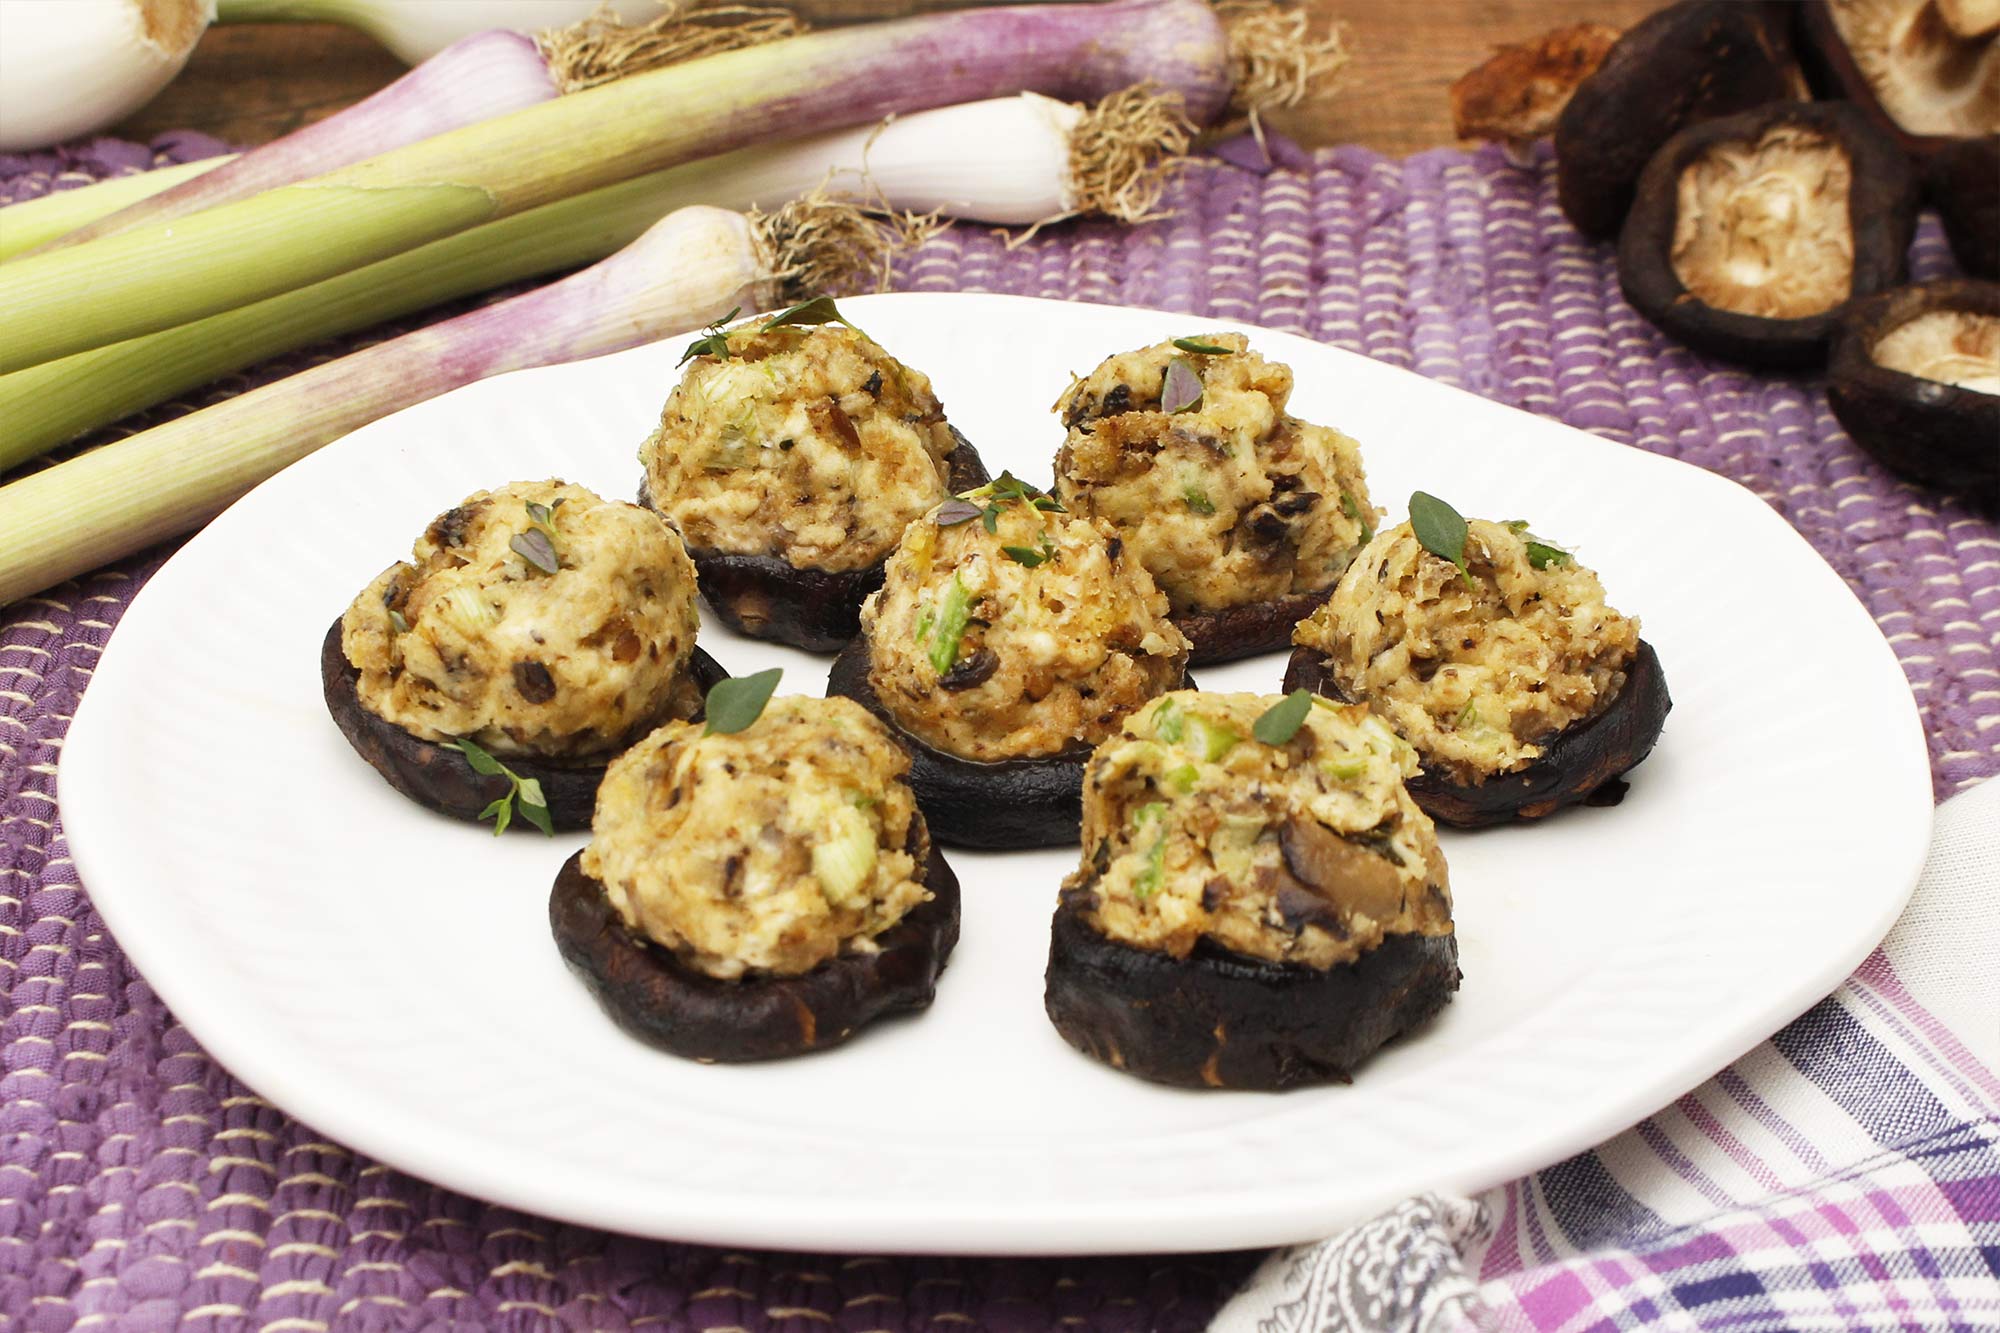 Green Garlic Stuffed Mushrooms